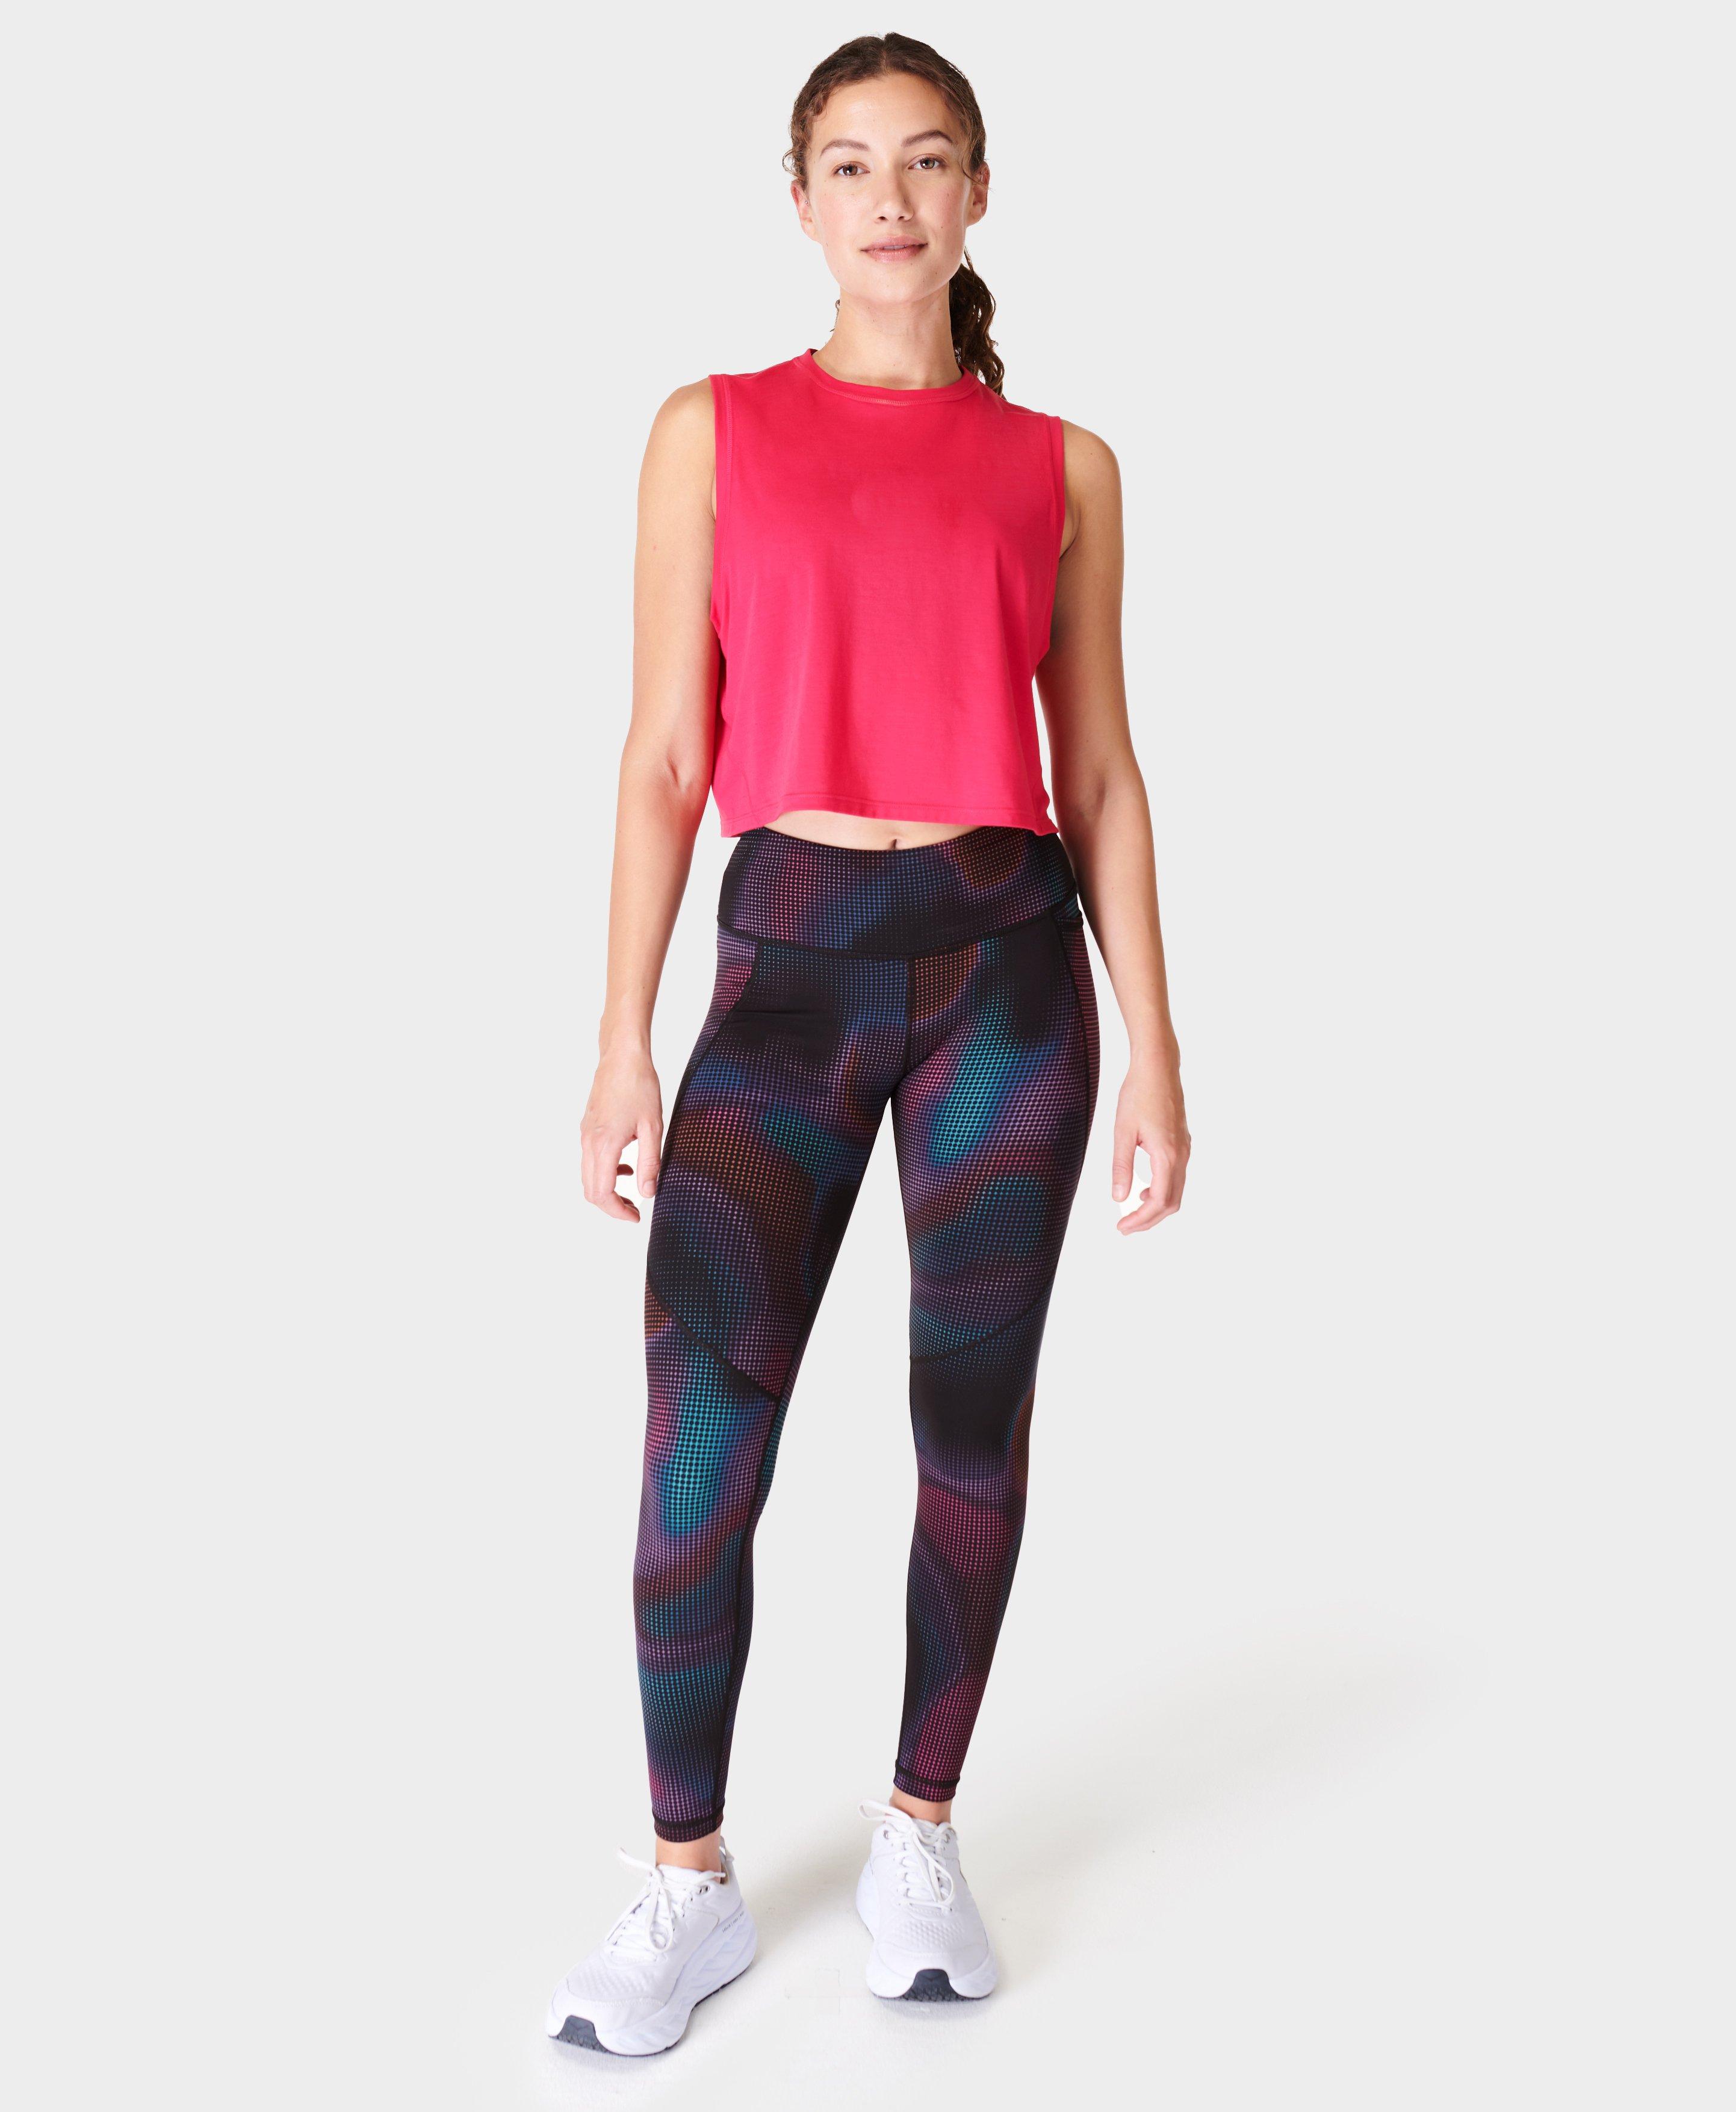 Power Workout Leggings - Black Gradient Dot Print, Women's Leggings